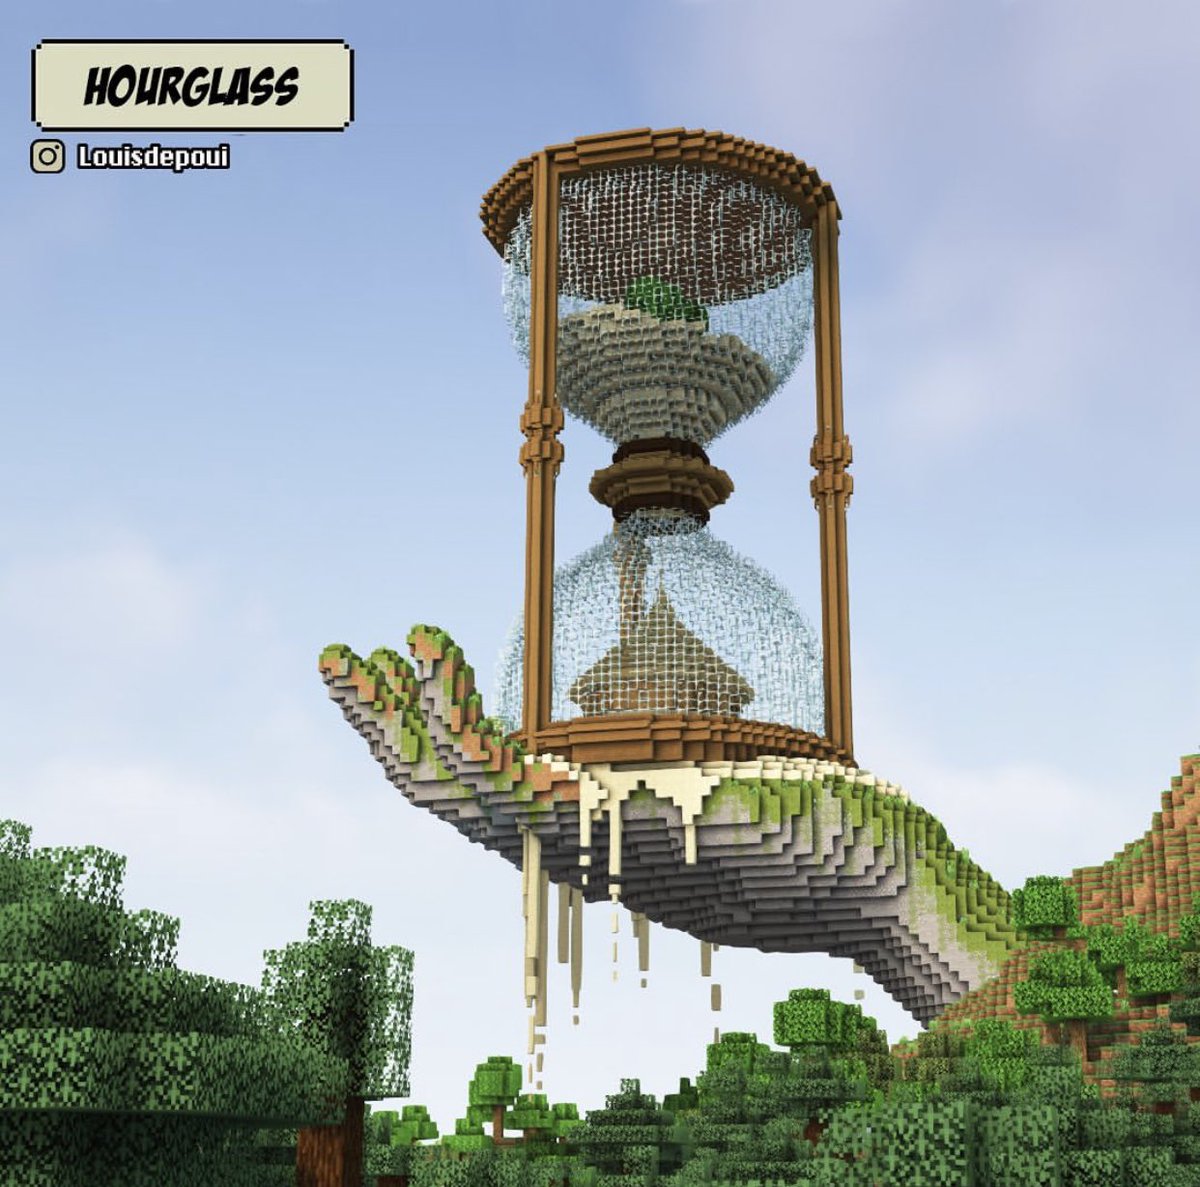 Hourglass built by @louisdepoui #minecraft建築コミュ #MinecraftServer #minecraftbuilds #Minecraft